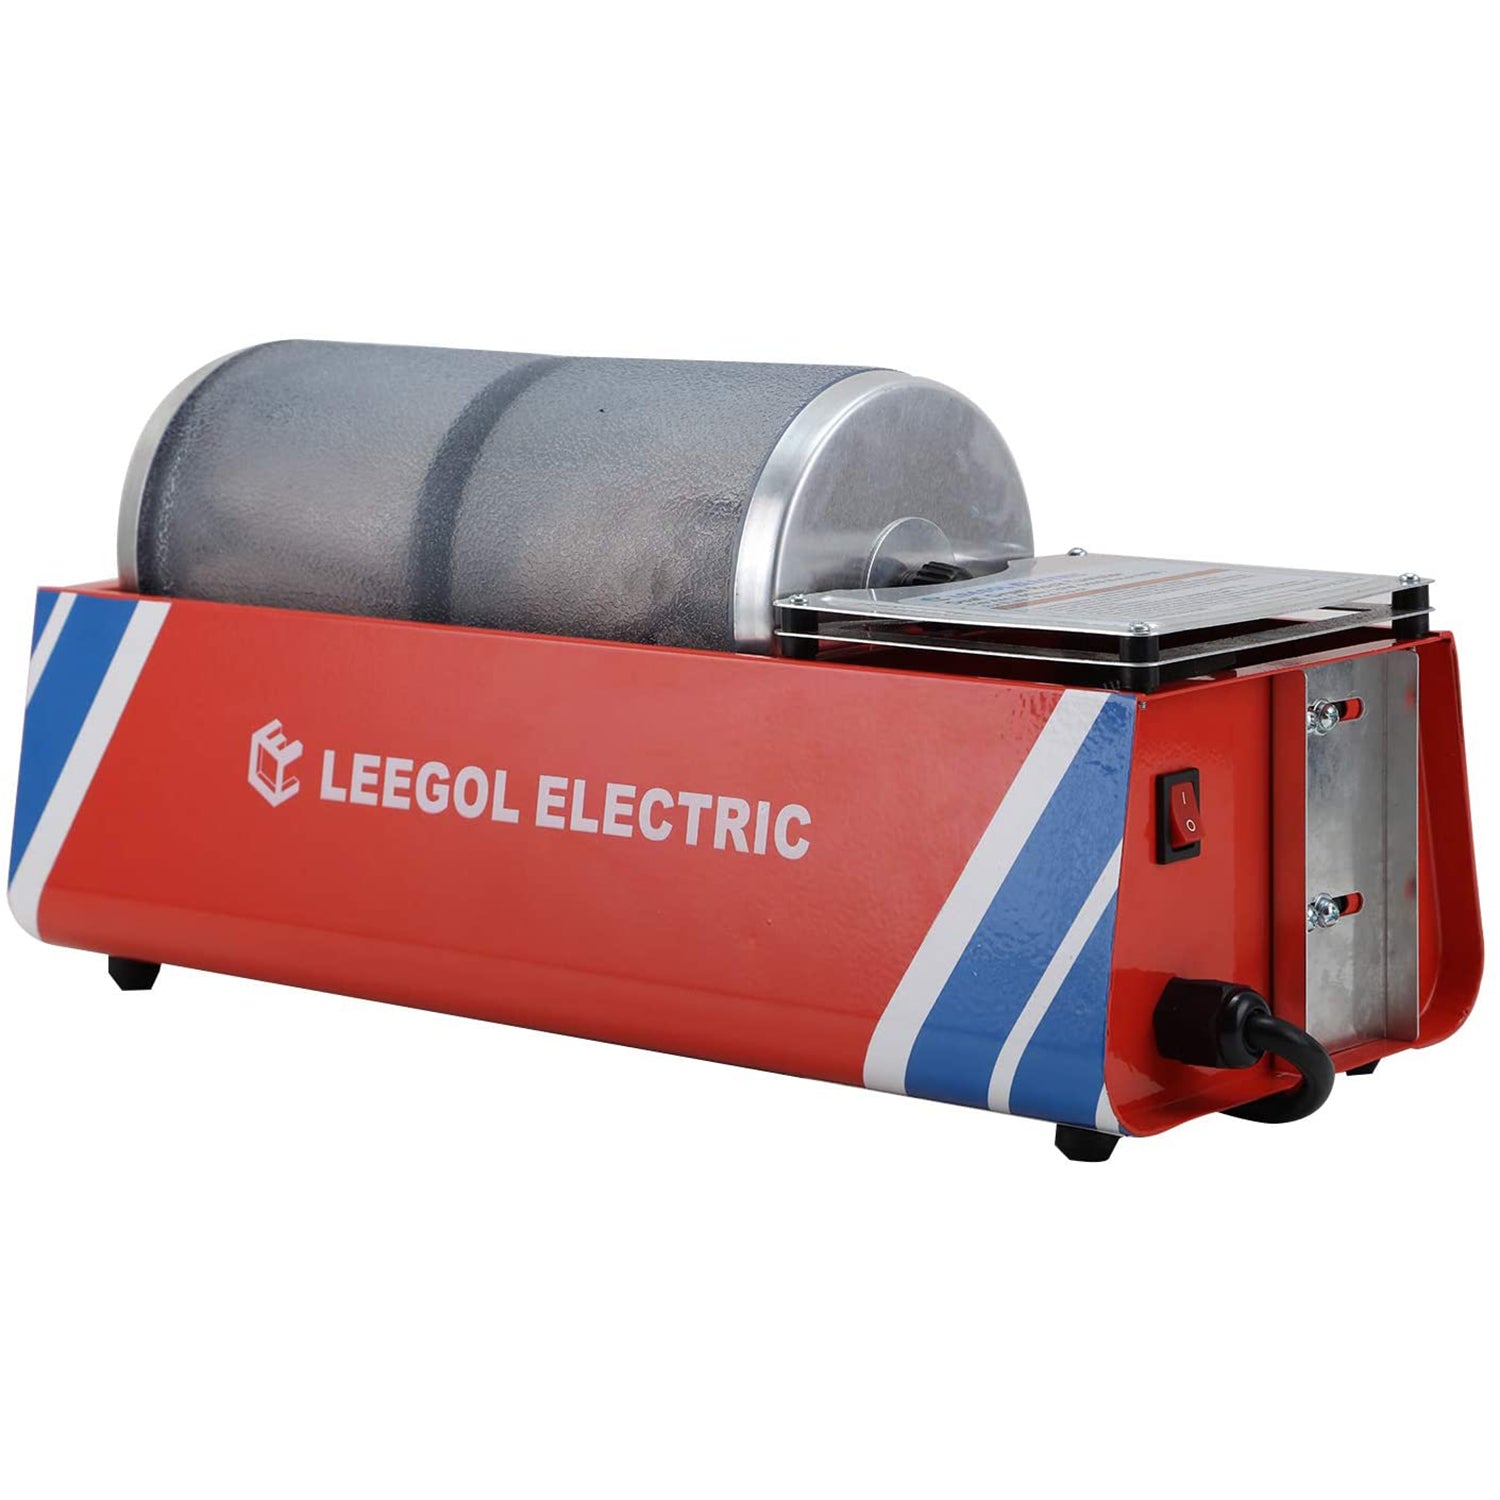 Leegol Electric Hobby Rock Tumbler Machine (Professional Double